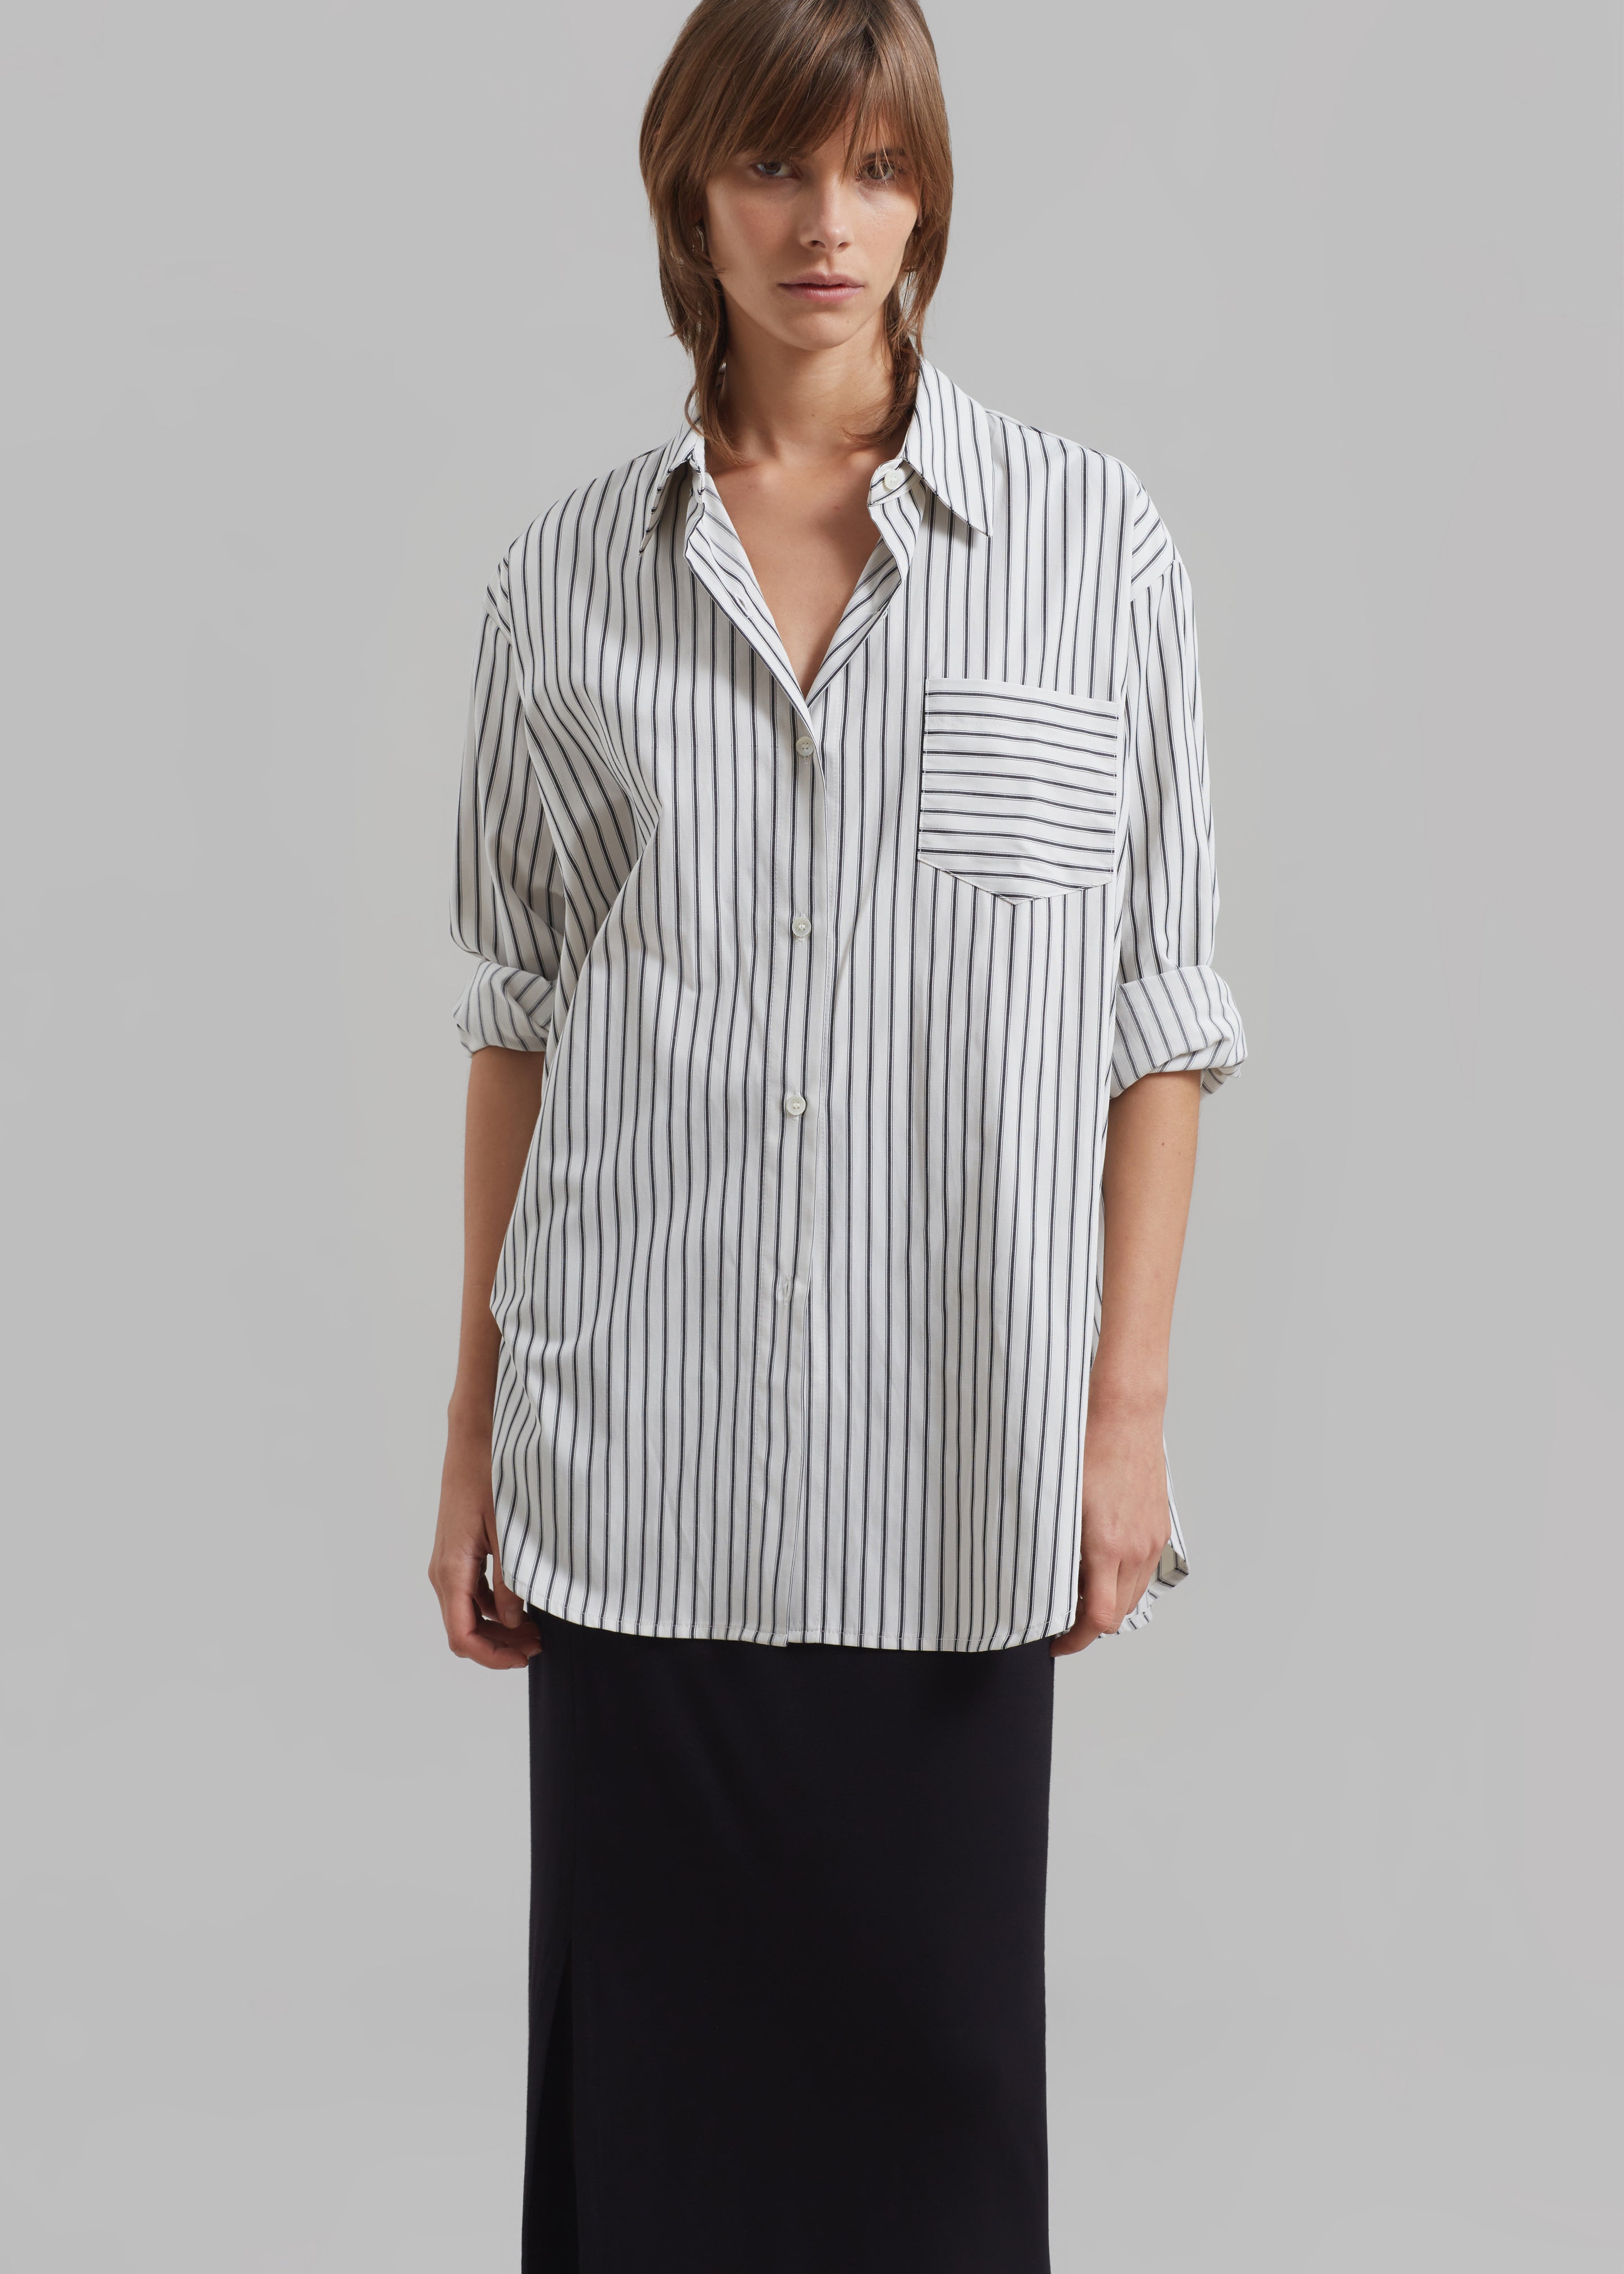 Rine Pocket Shirt - White/Black Stripe - 4